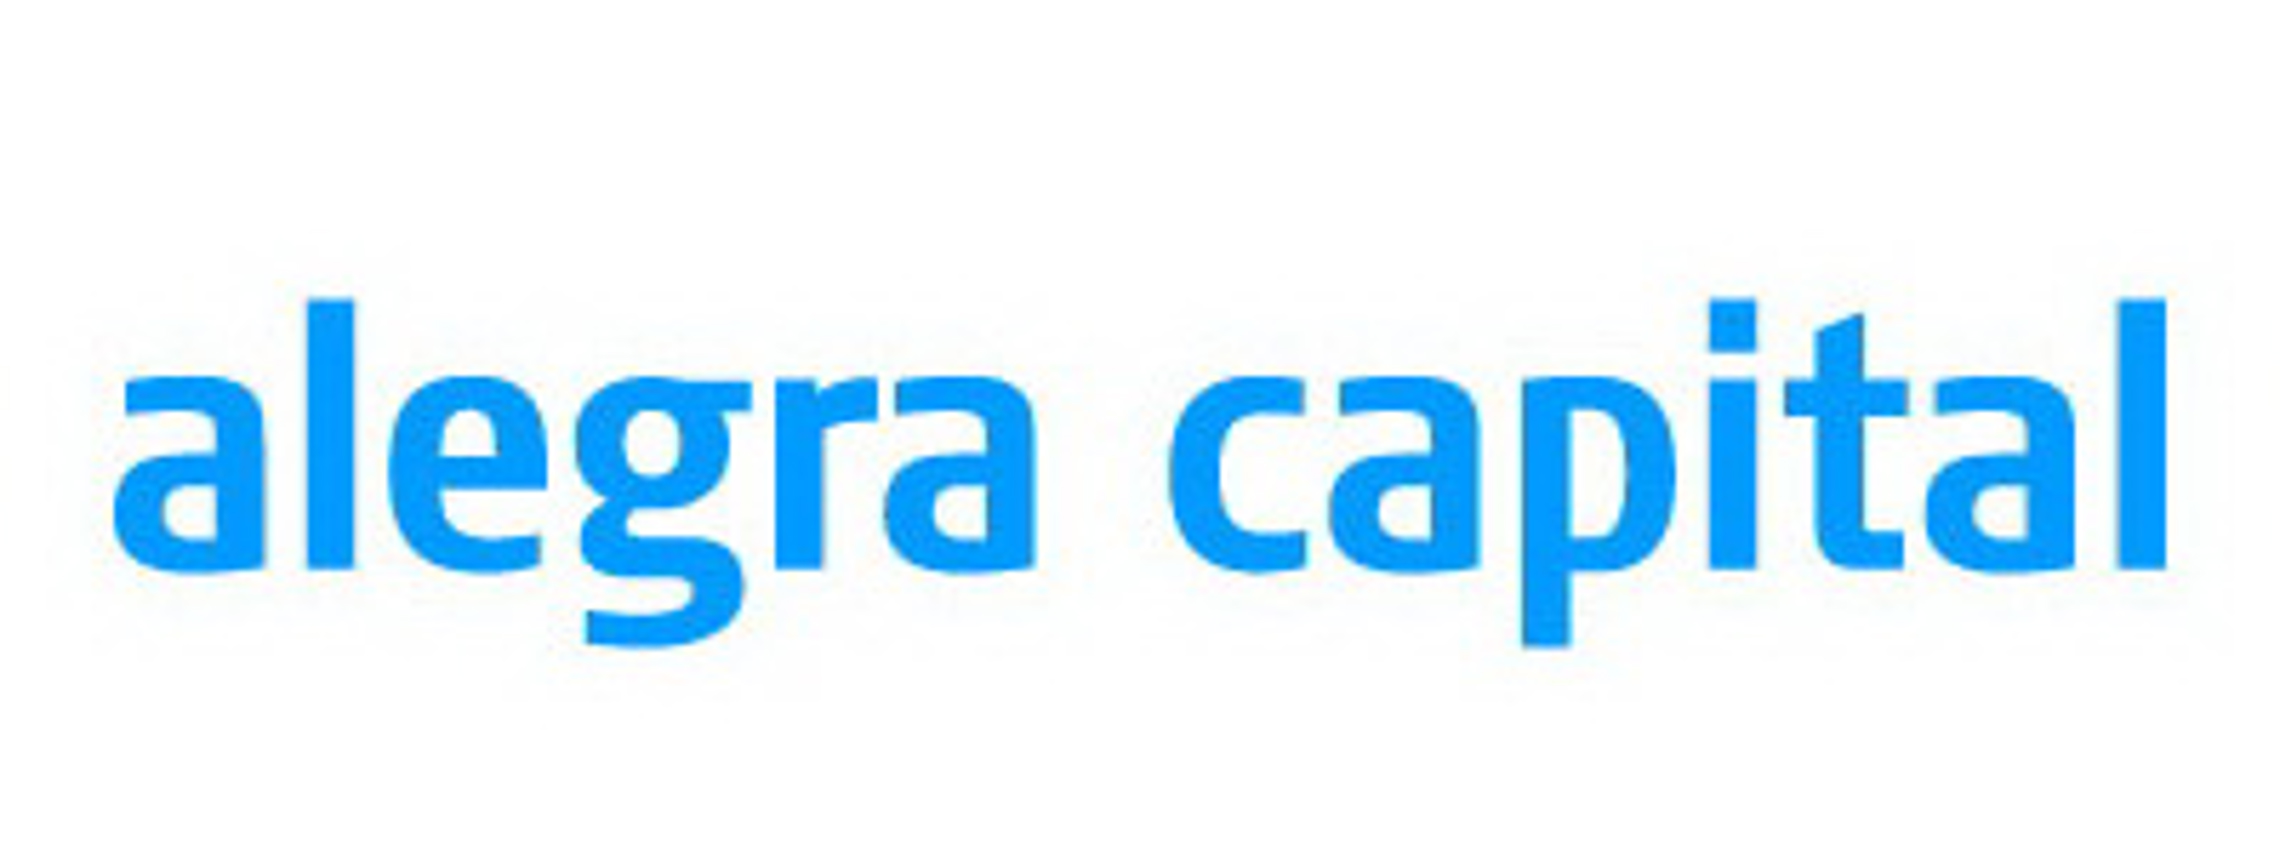 Alegra Capital